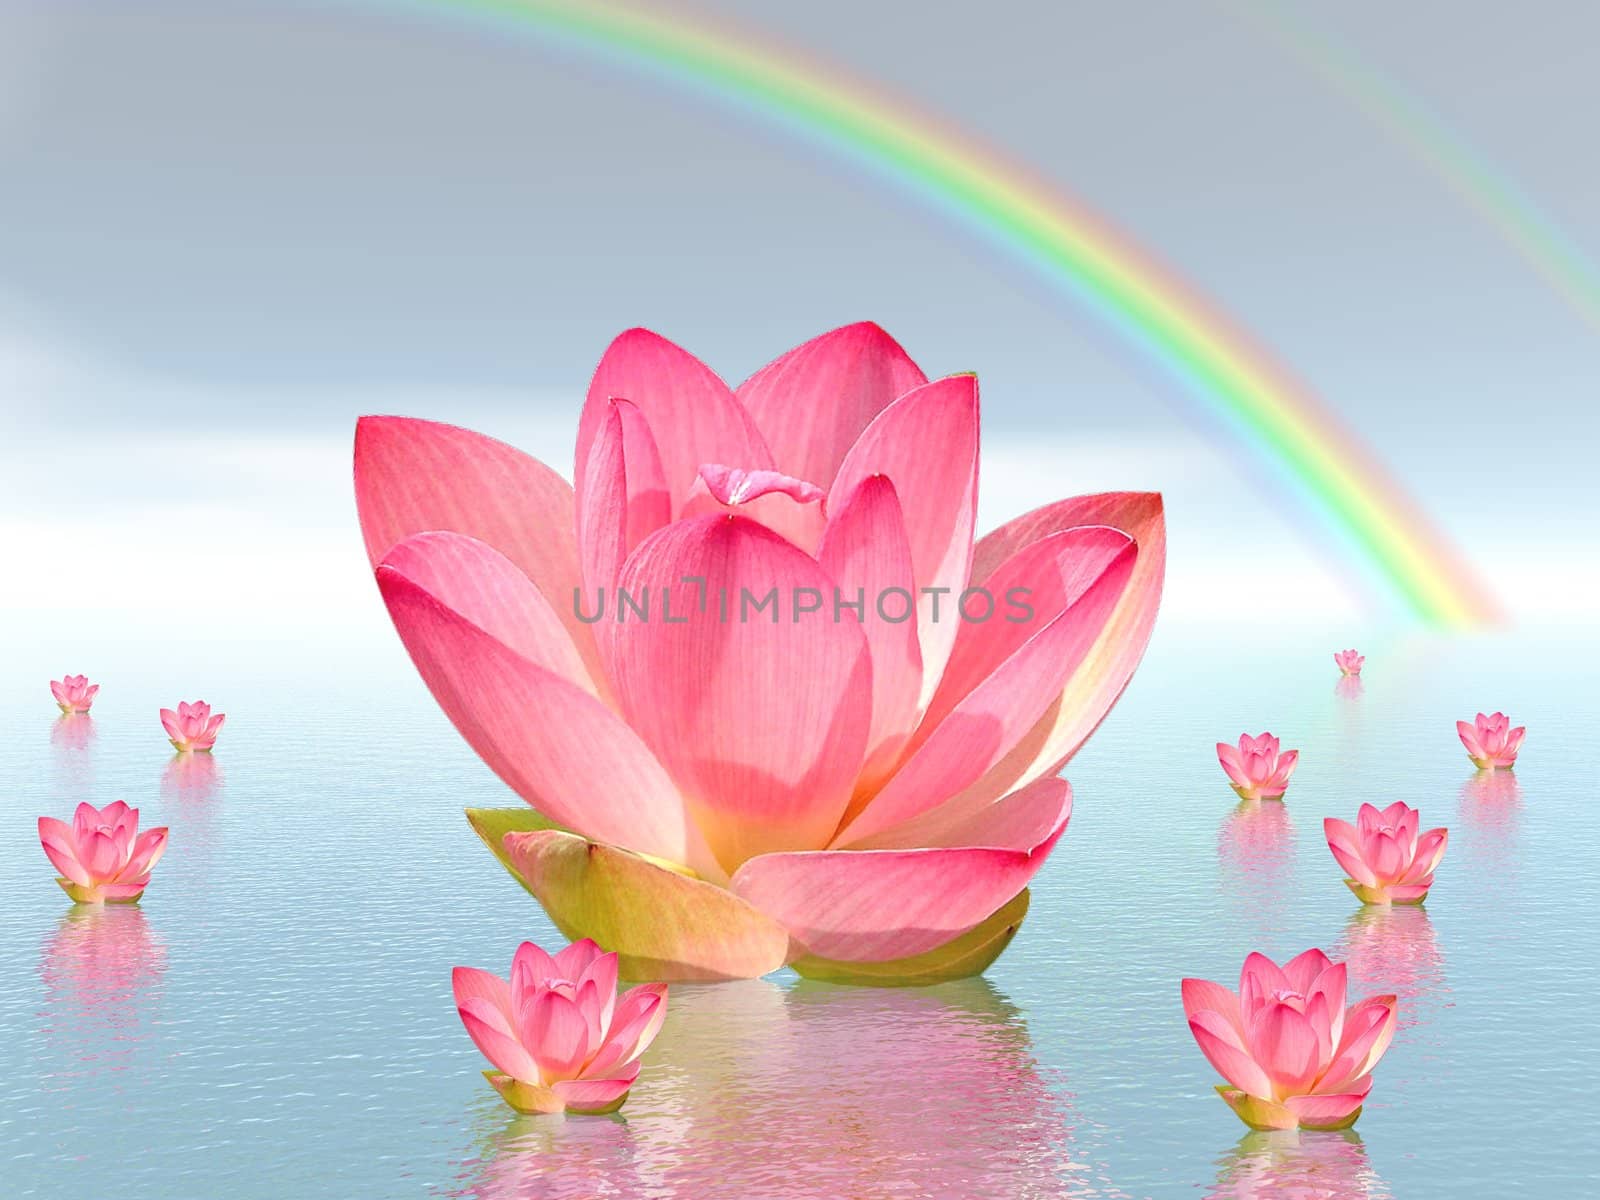 Lily flowers under rainbow by Elenaphotos21